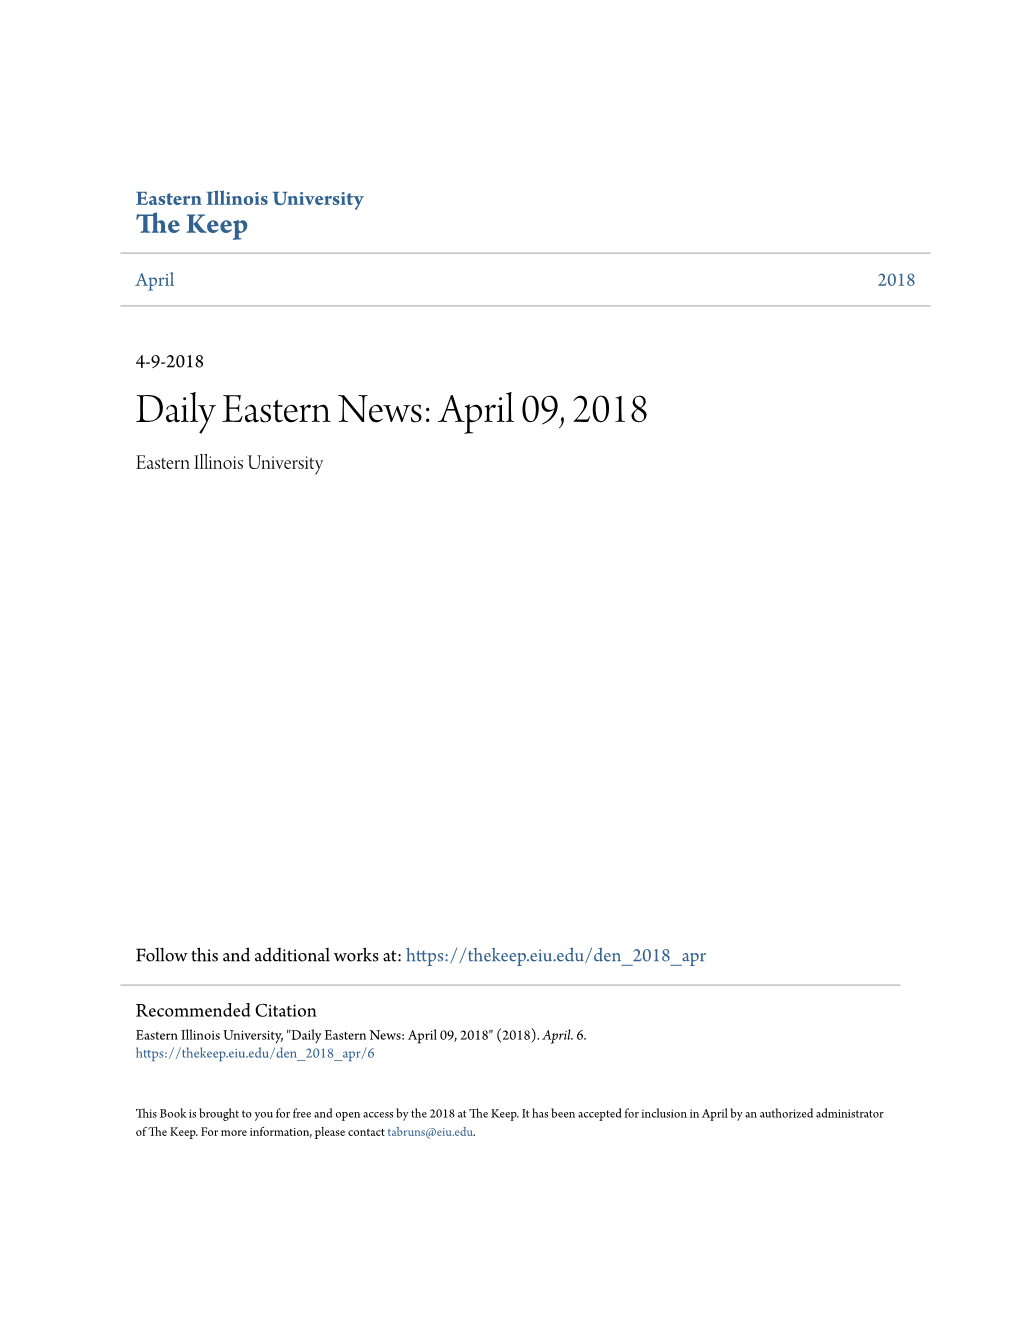 Daily Eastern News: April 09, 2018 Eastern Illinois University